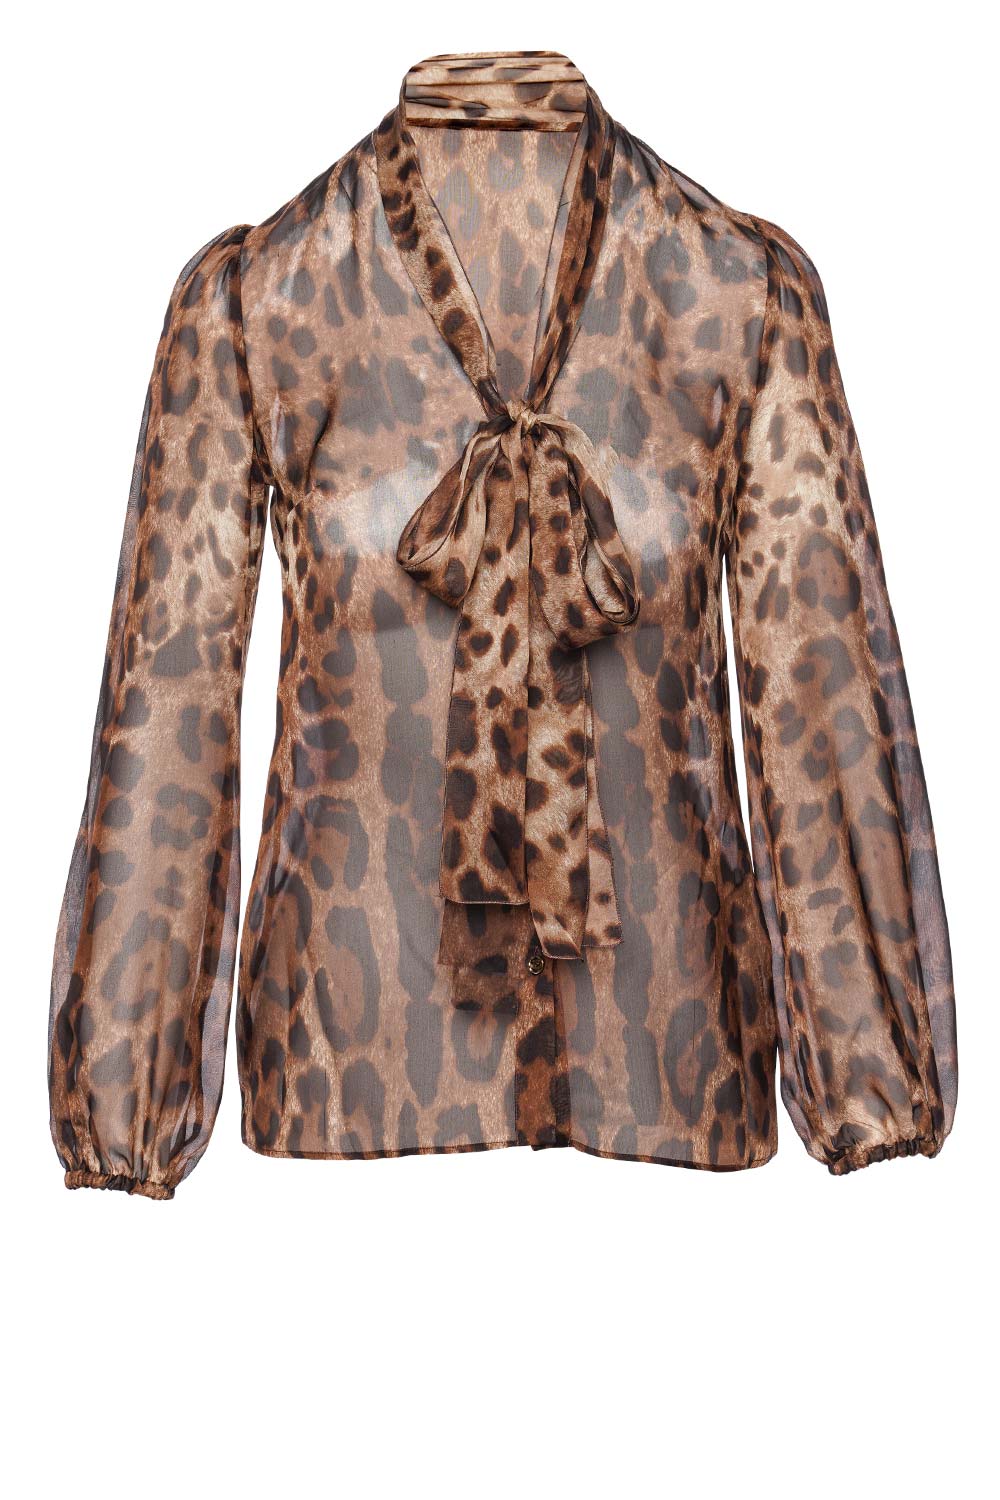 Dolce & Gabbana Leopard Print Pussy-Bow Silk Blouse